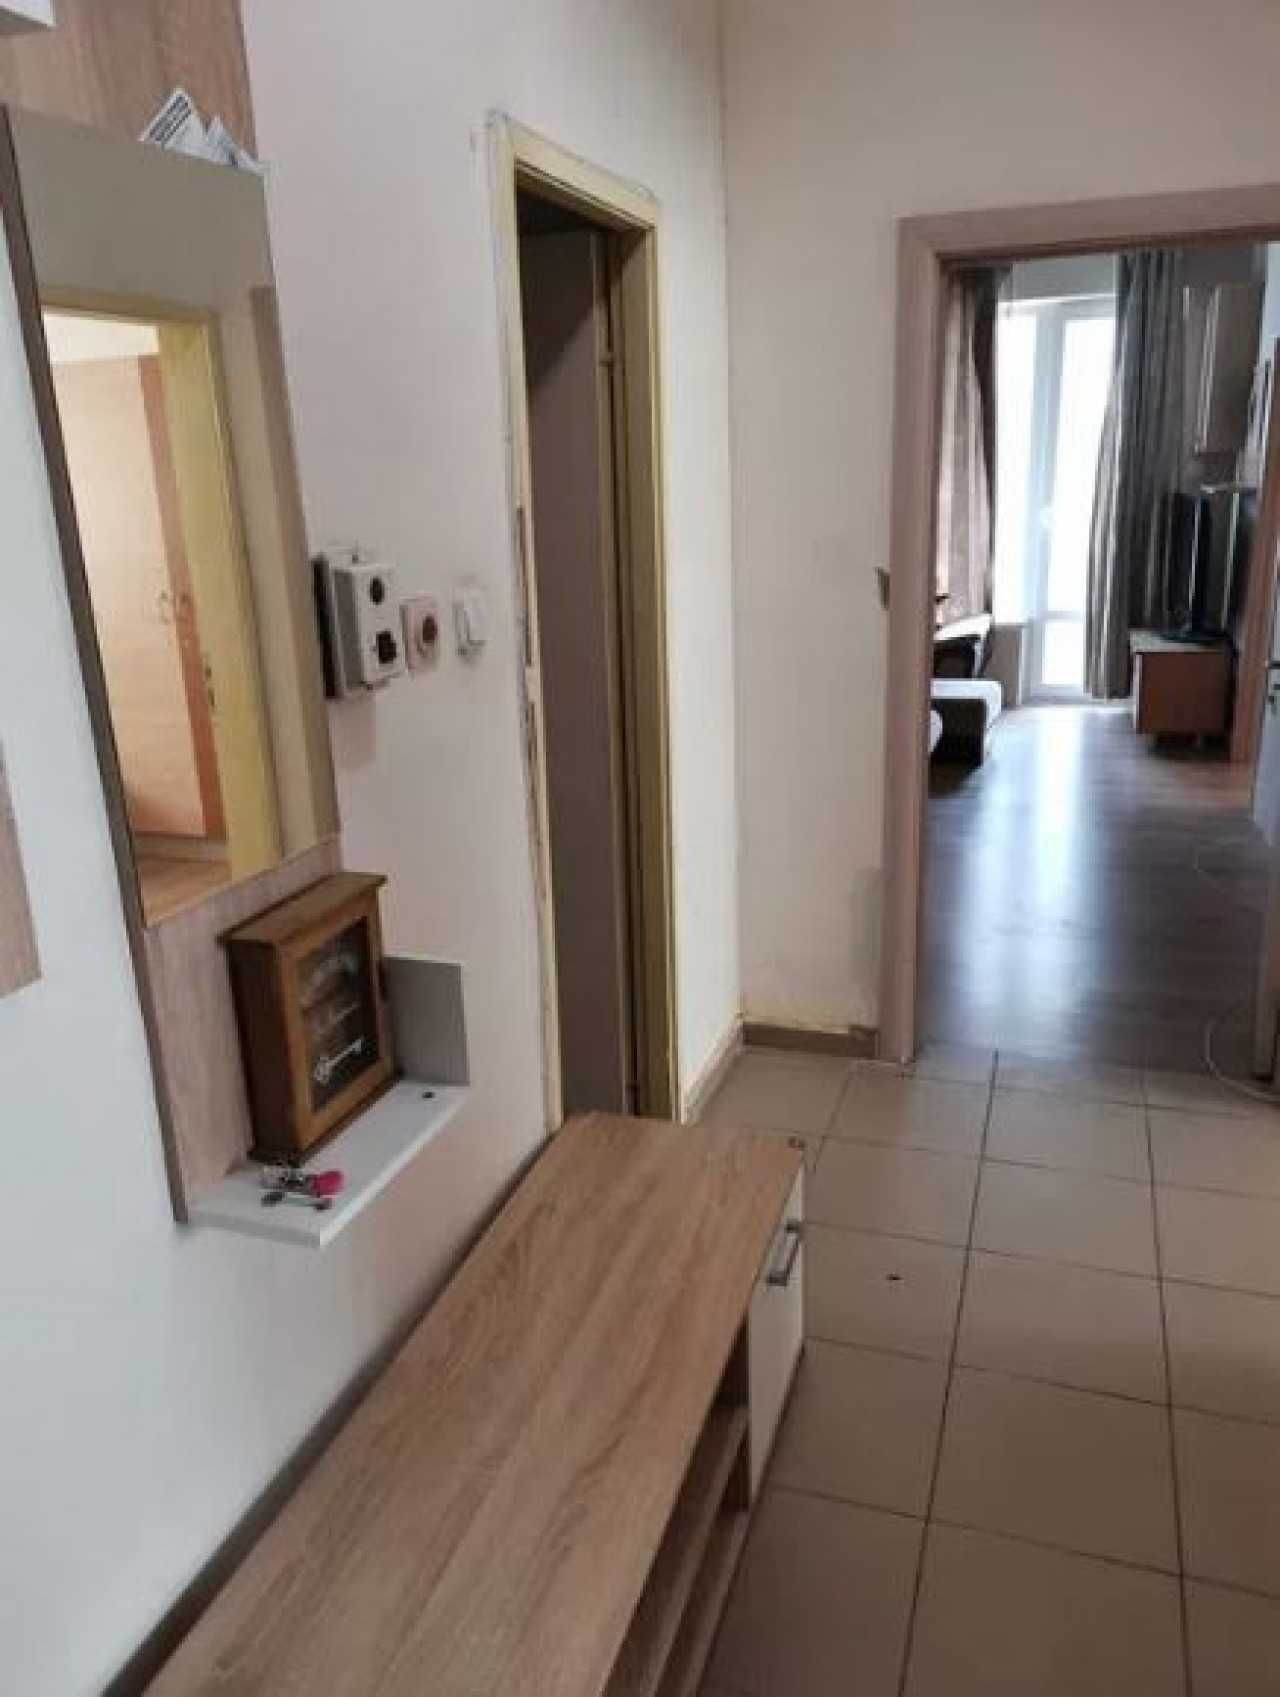 Тристаен апартамент в Каменица 2